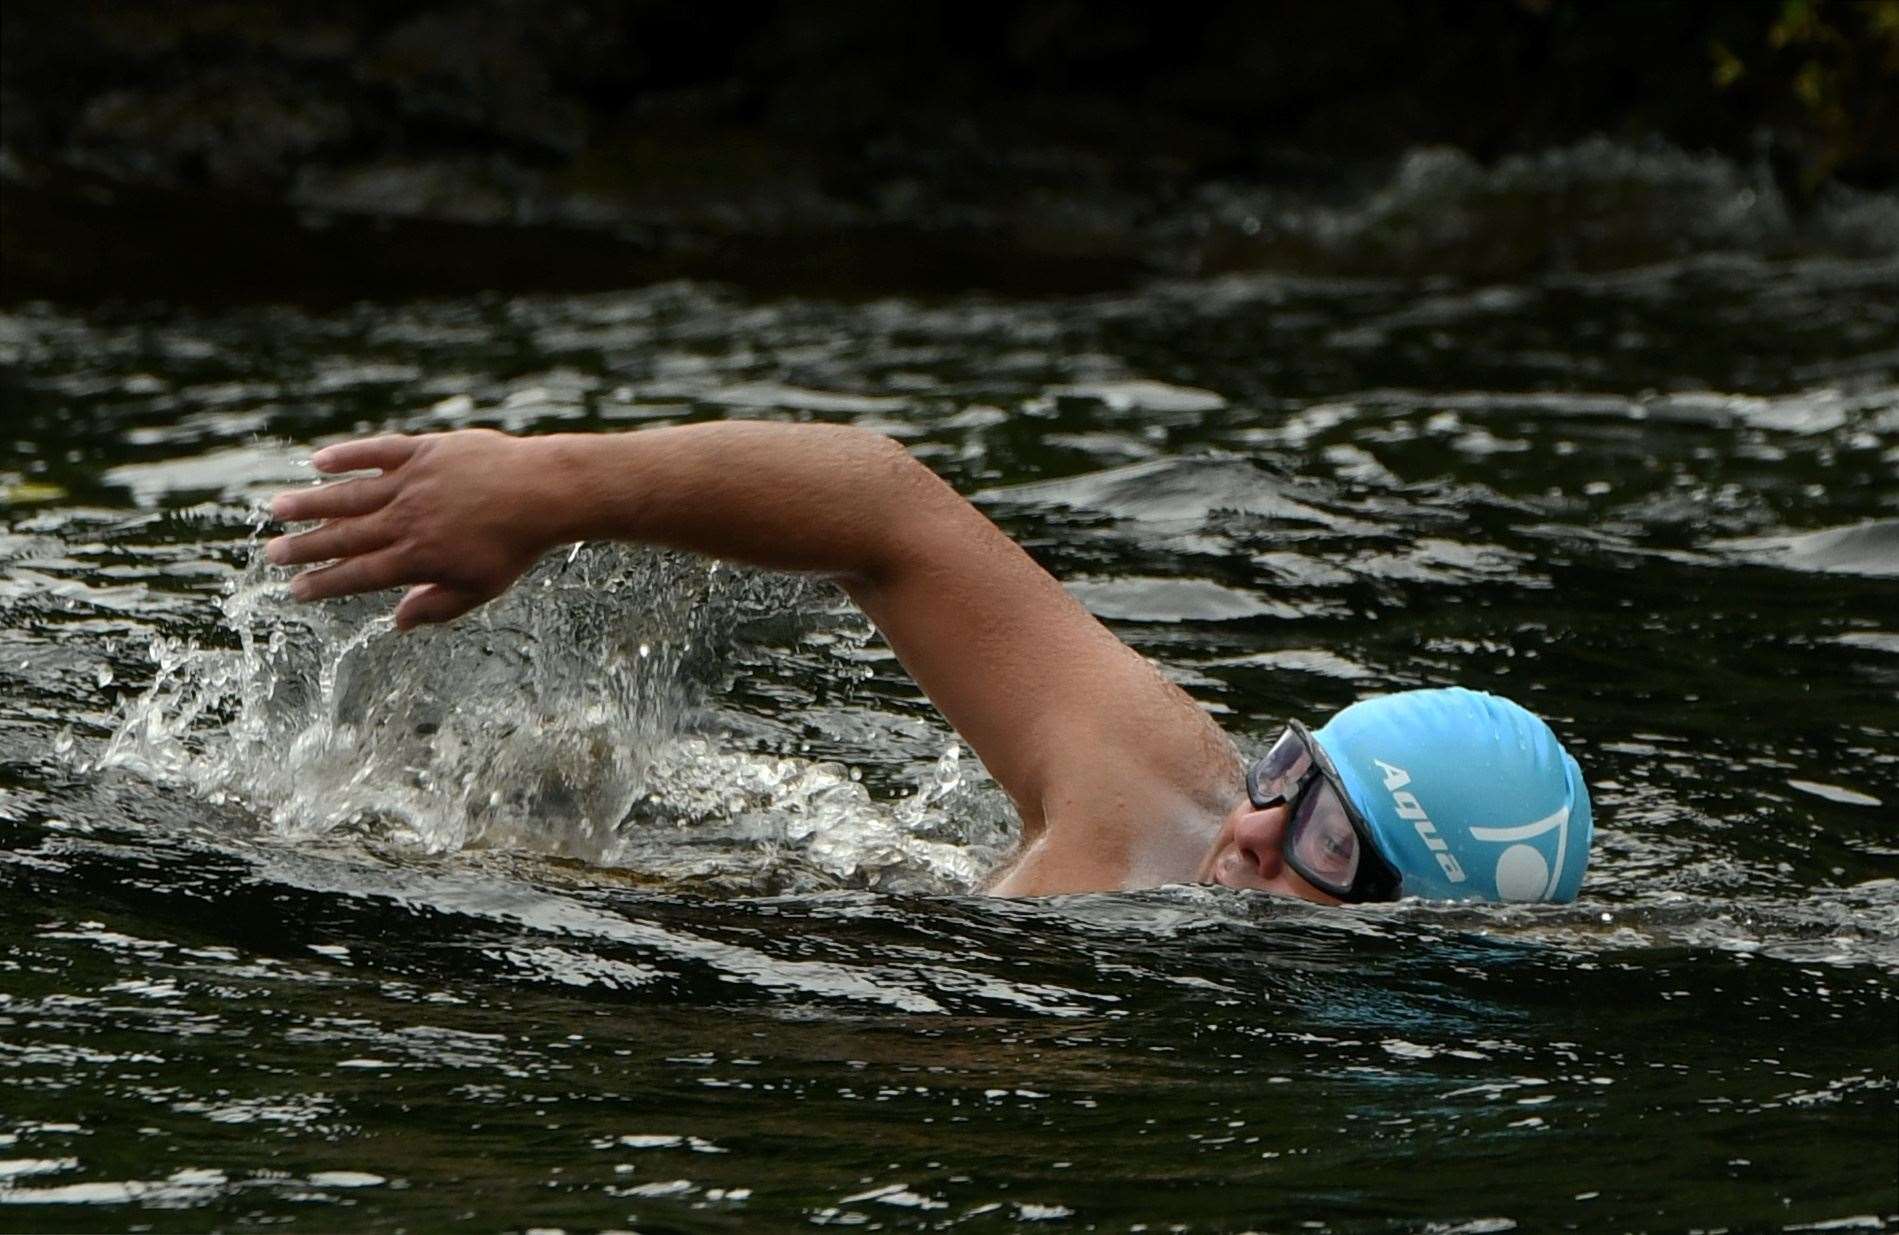 Piotr Biankowski swimming in the dark waters of Loch Ness. Picture: James Mackenzie.